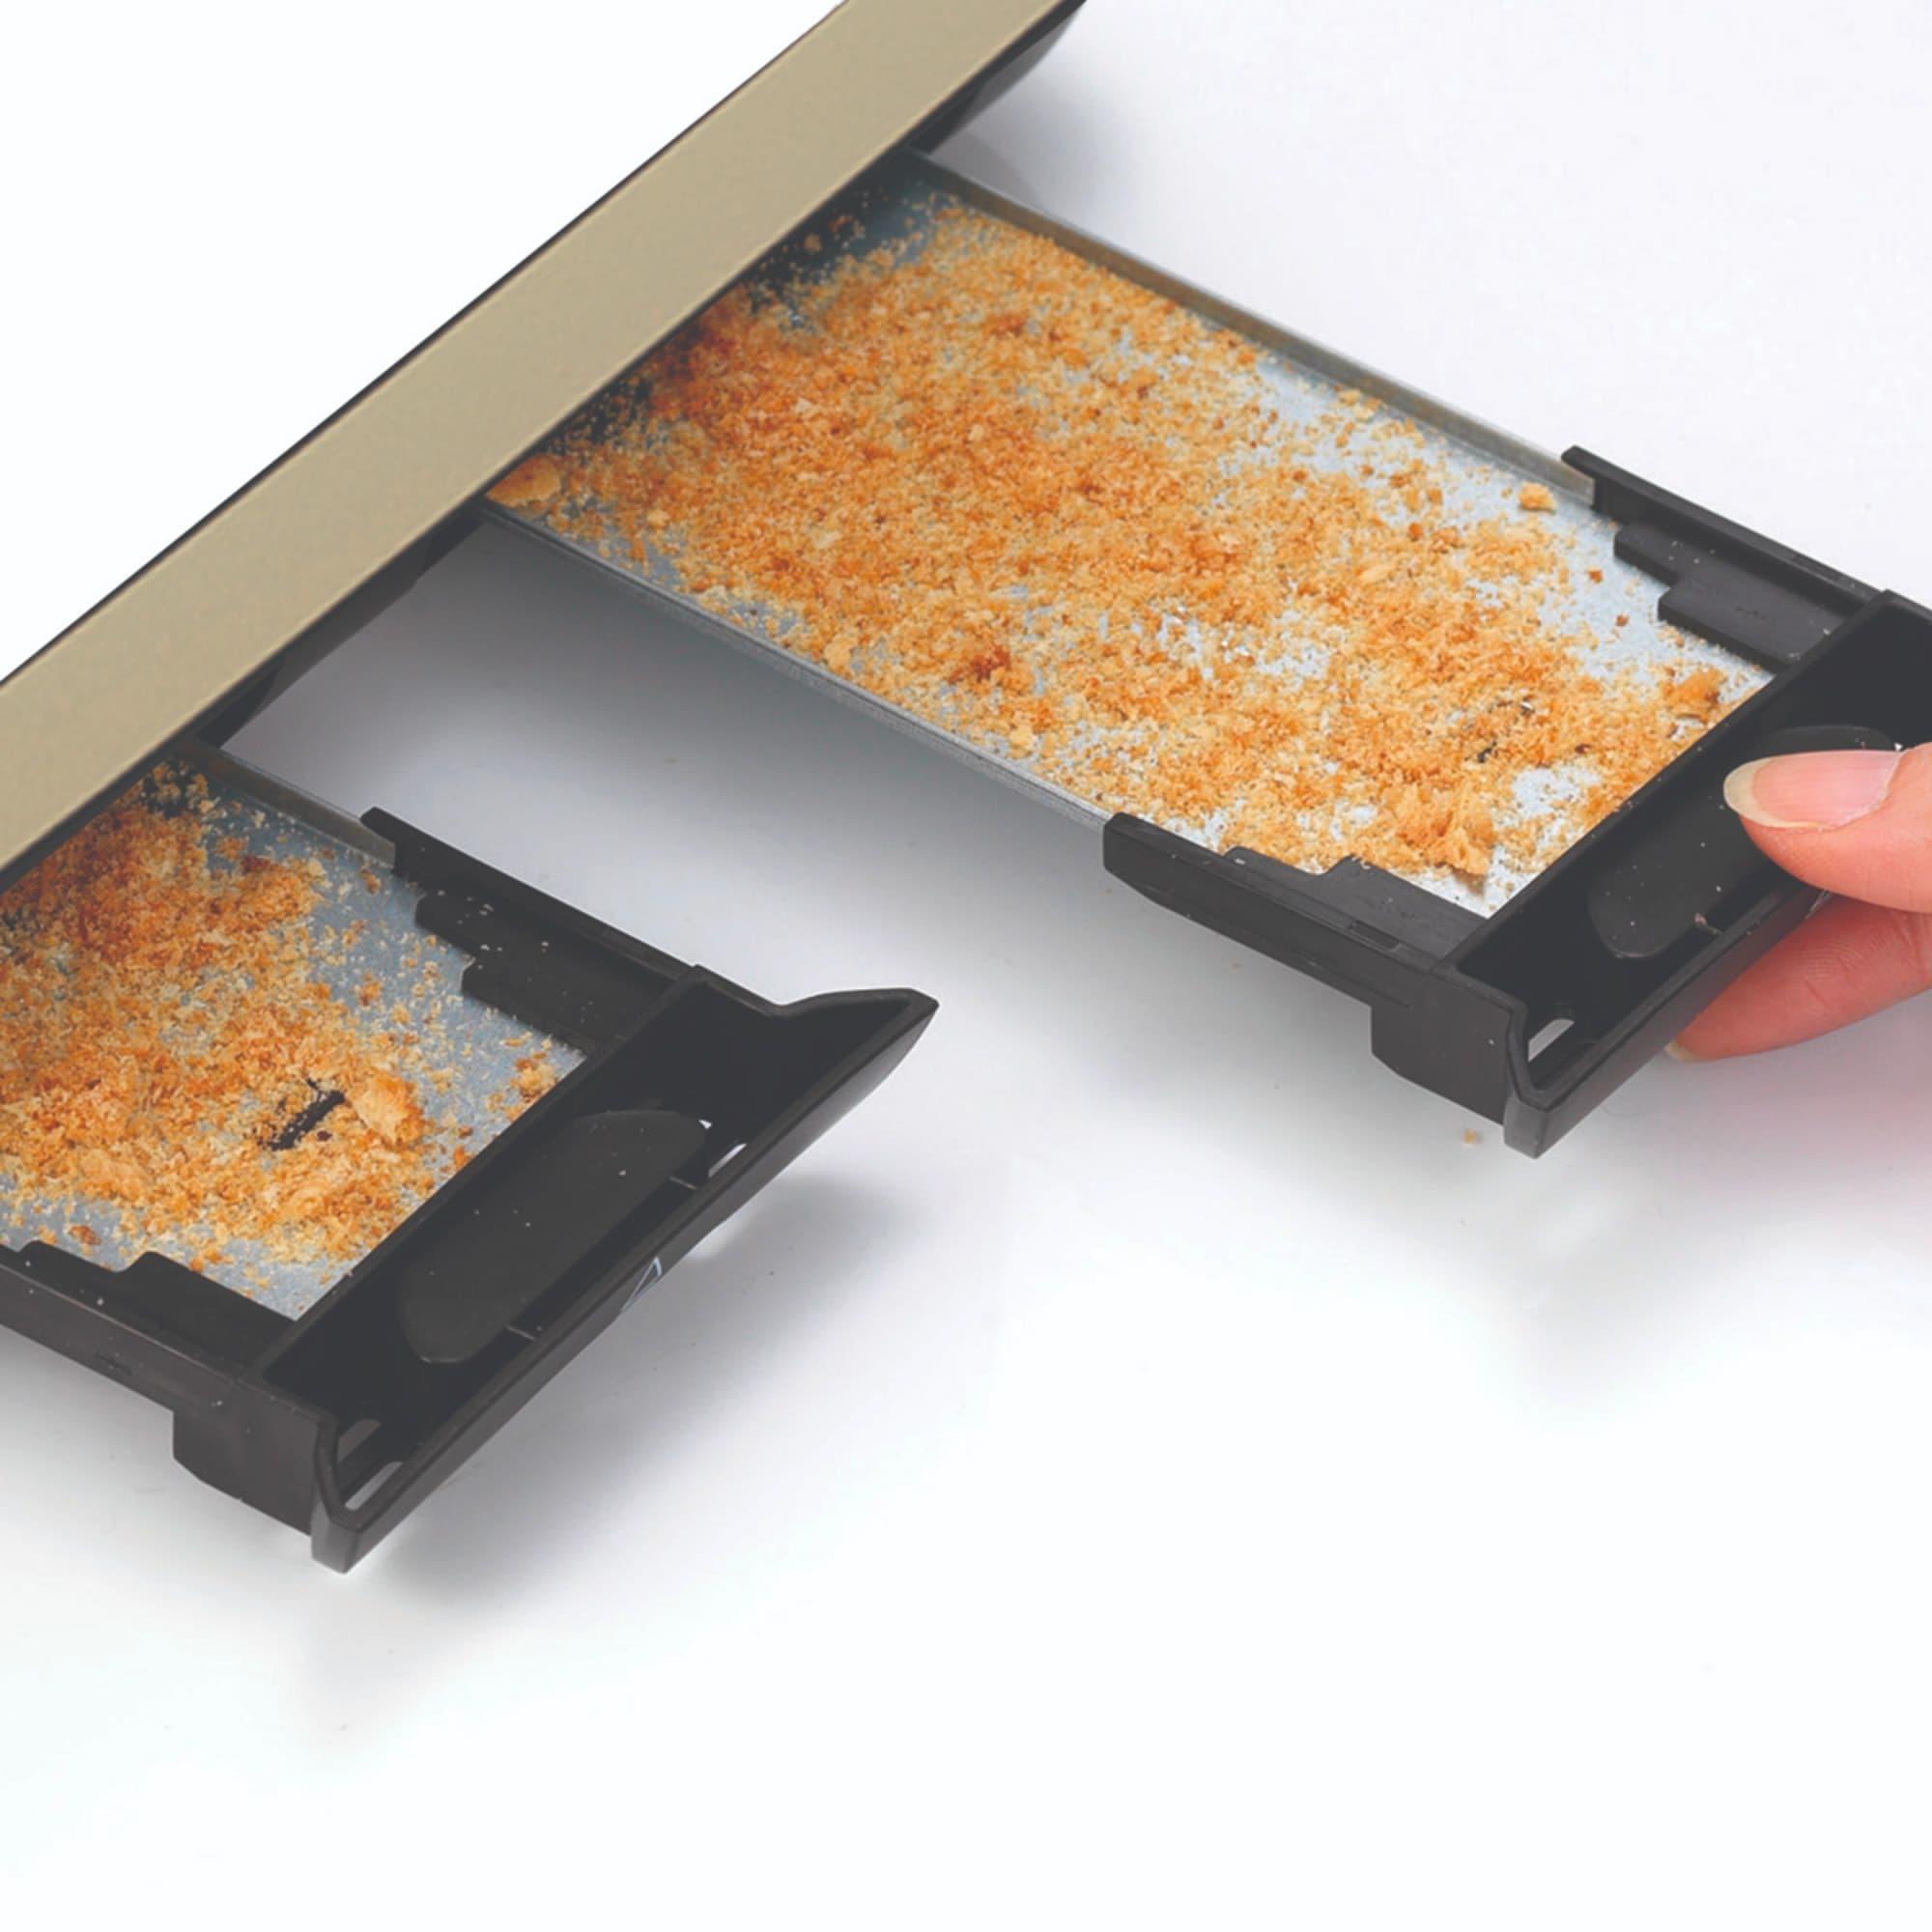 Morphy Richards Ascend Soft Gold 4 Slice Toaster White Image 4